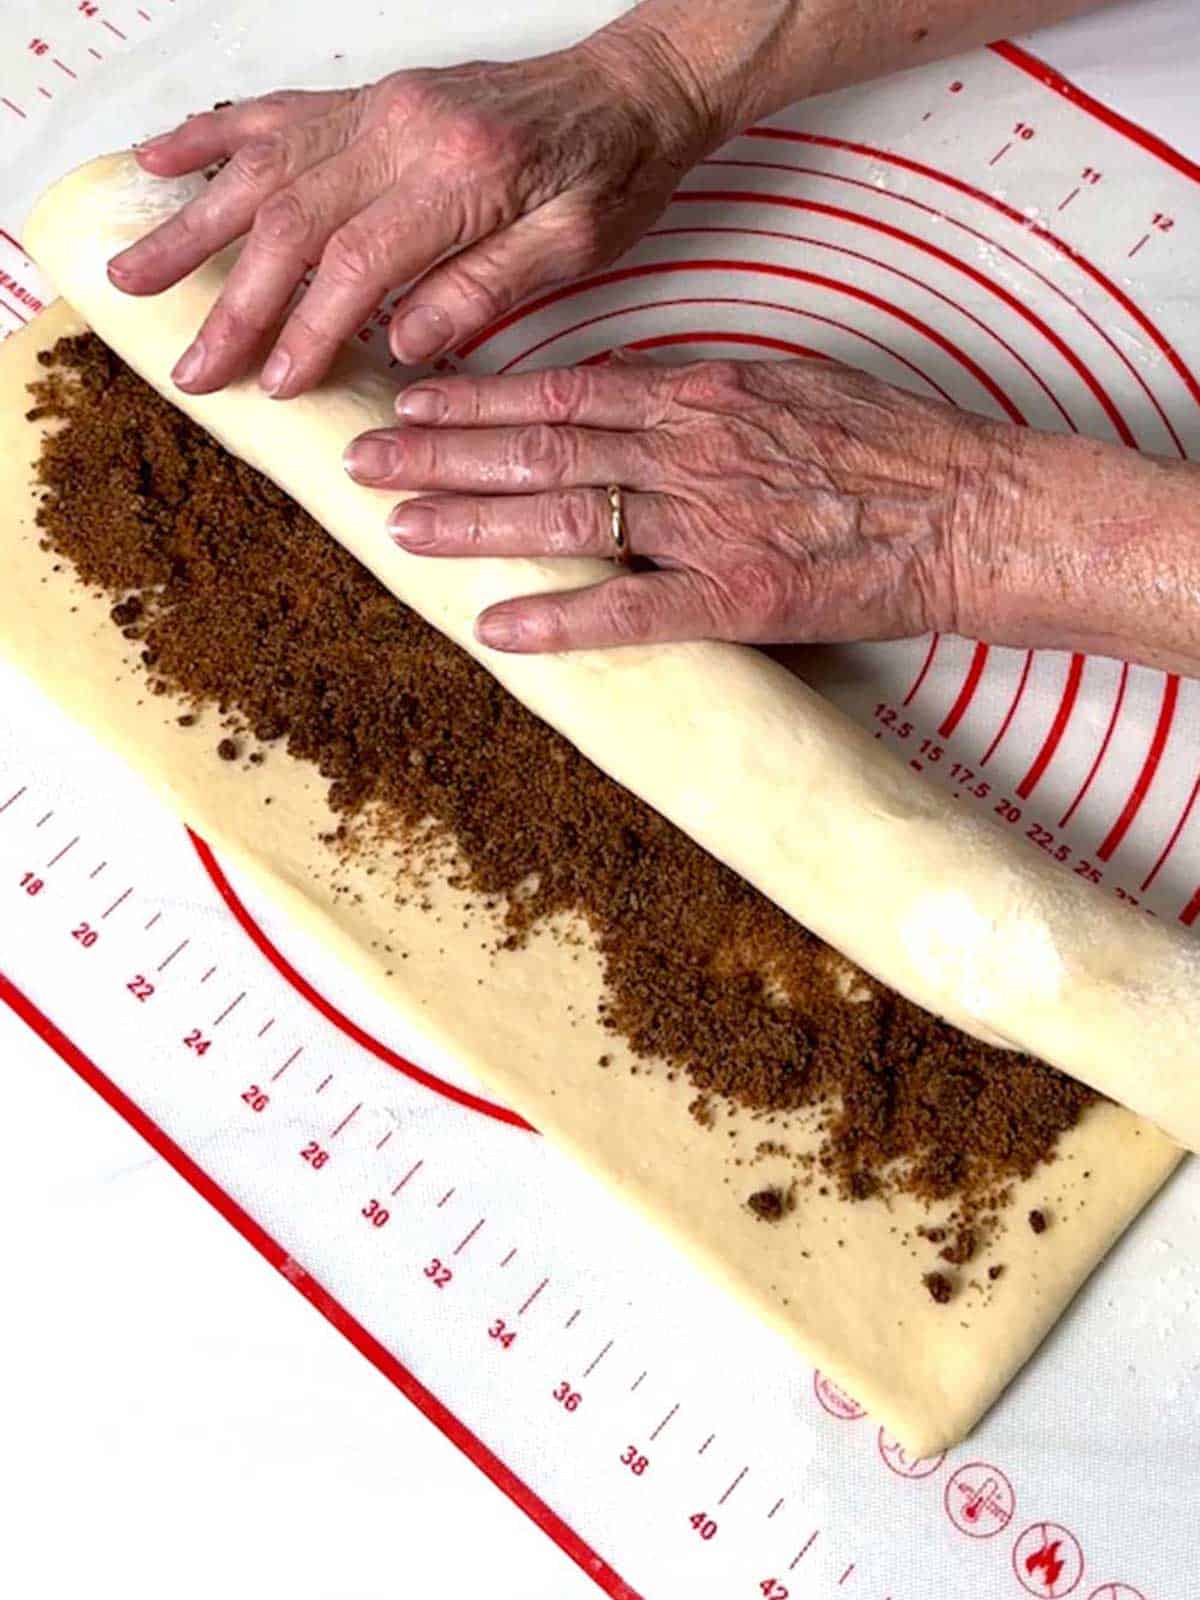 Rolling dough for cinnamon rolls.